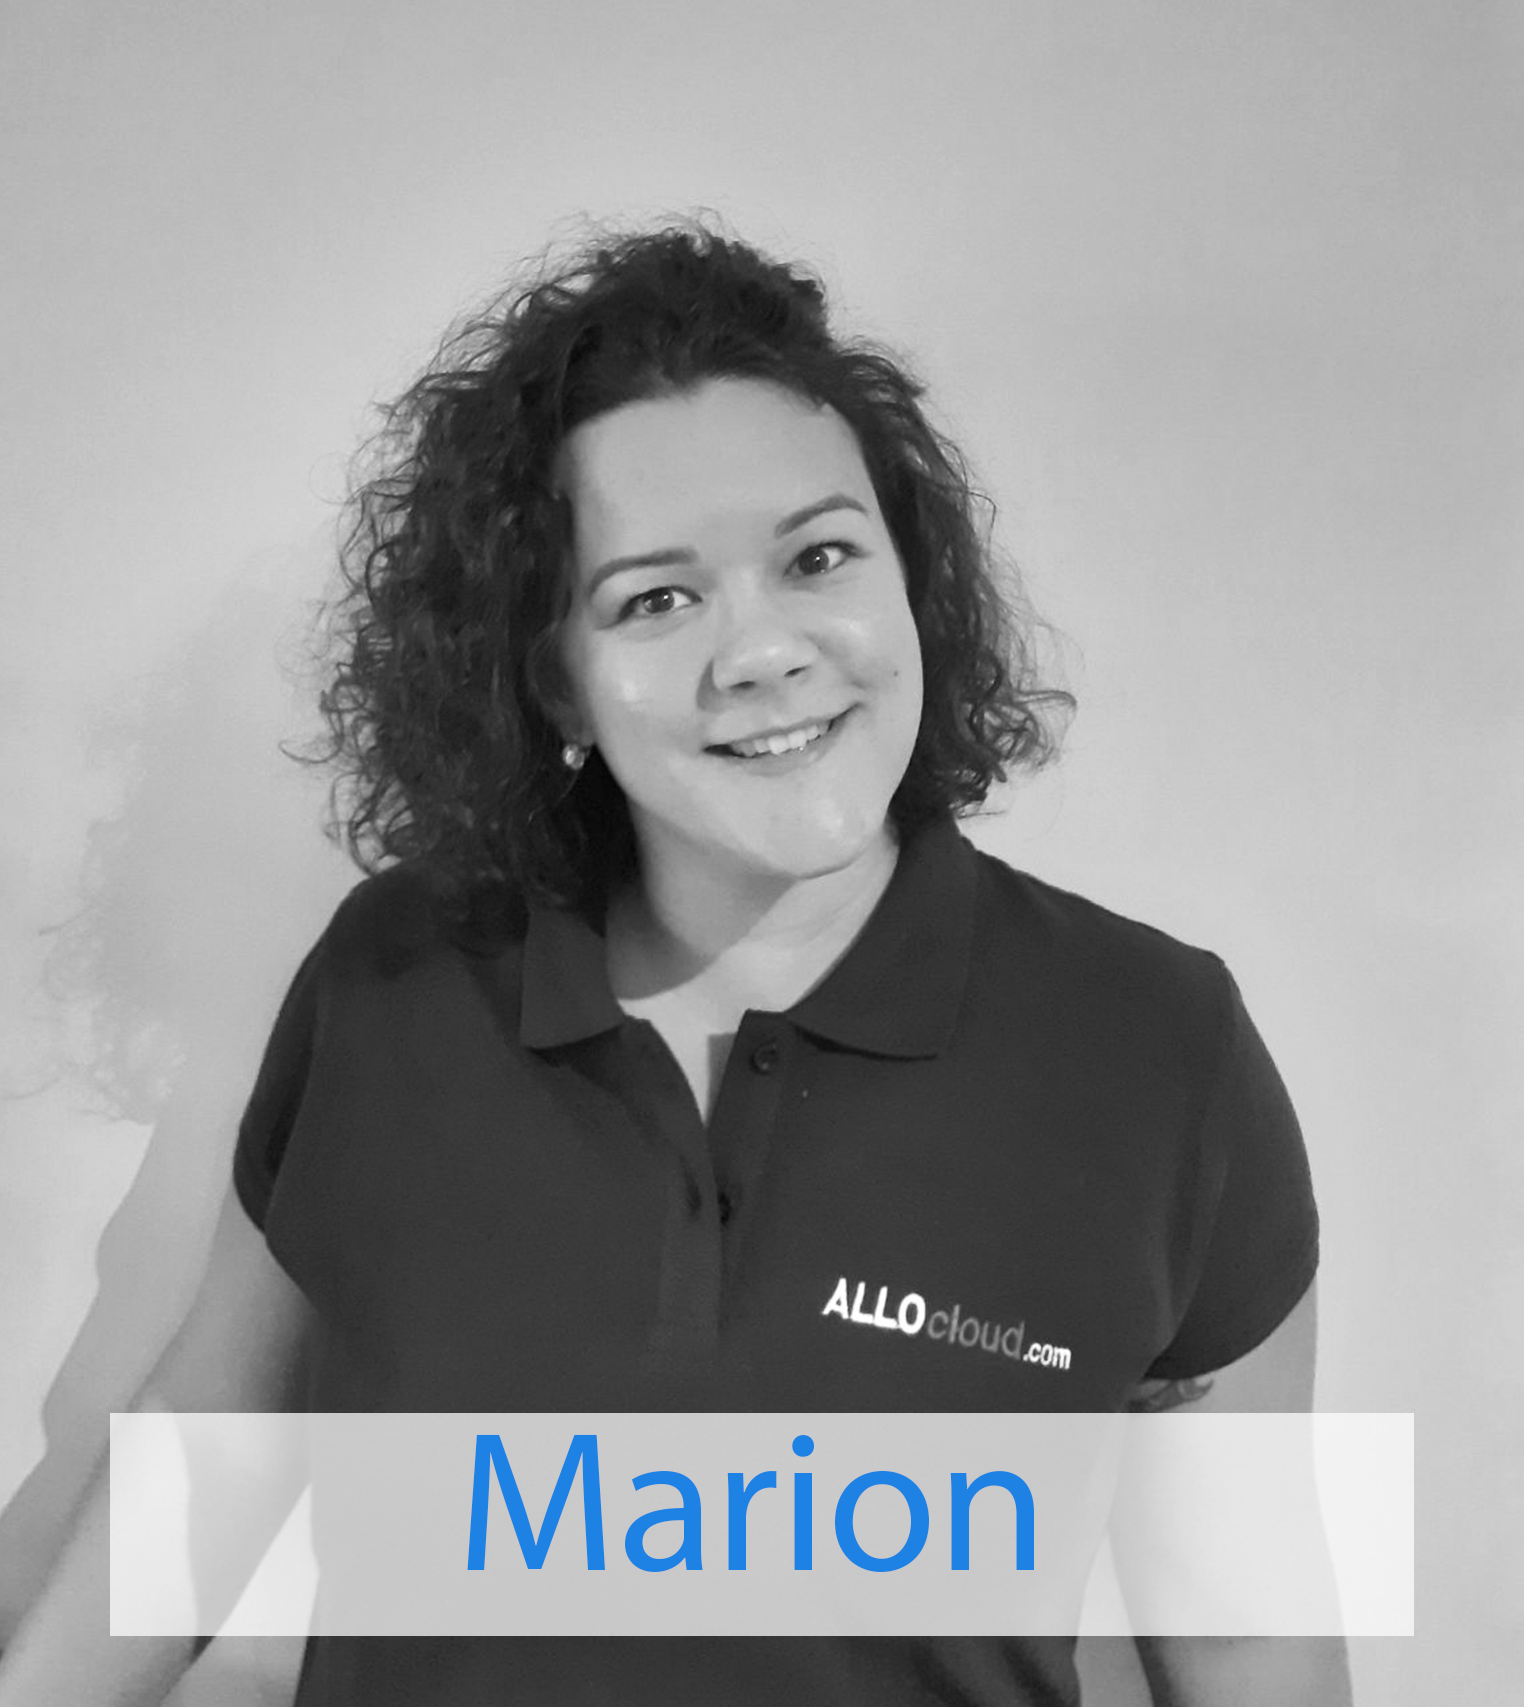 Meet me Marion